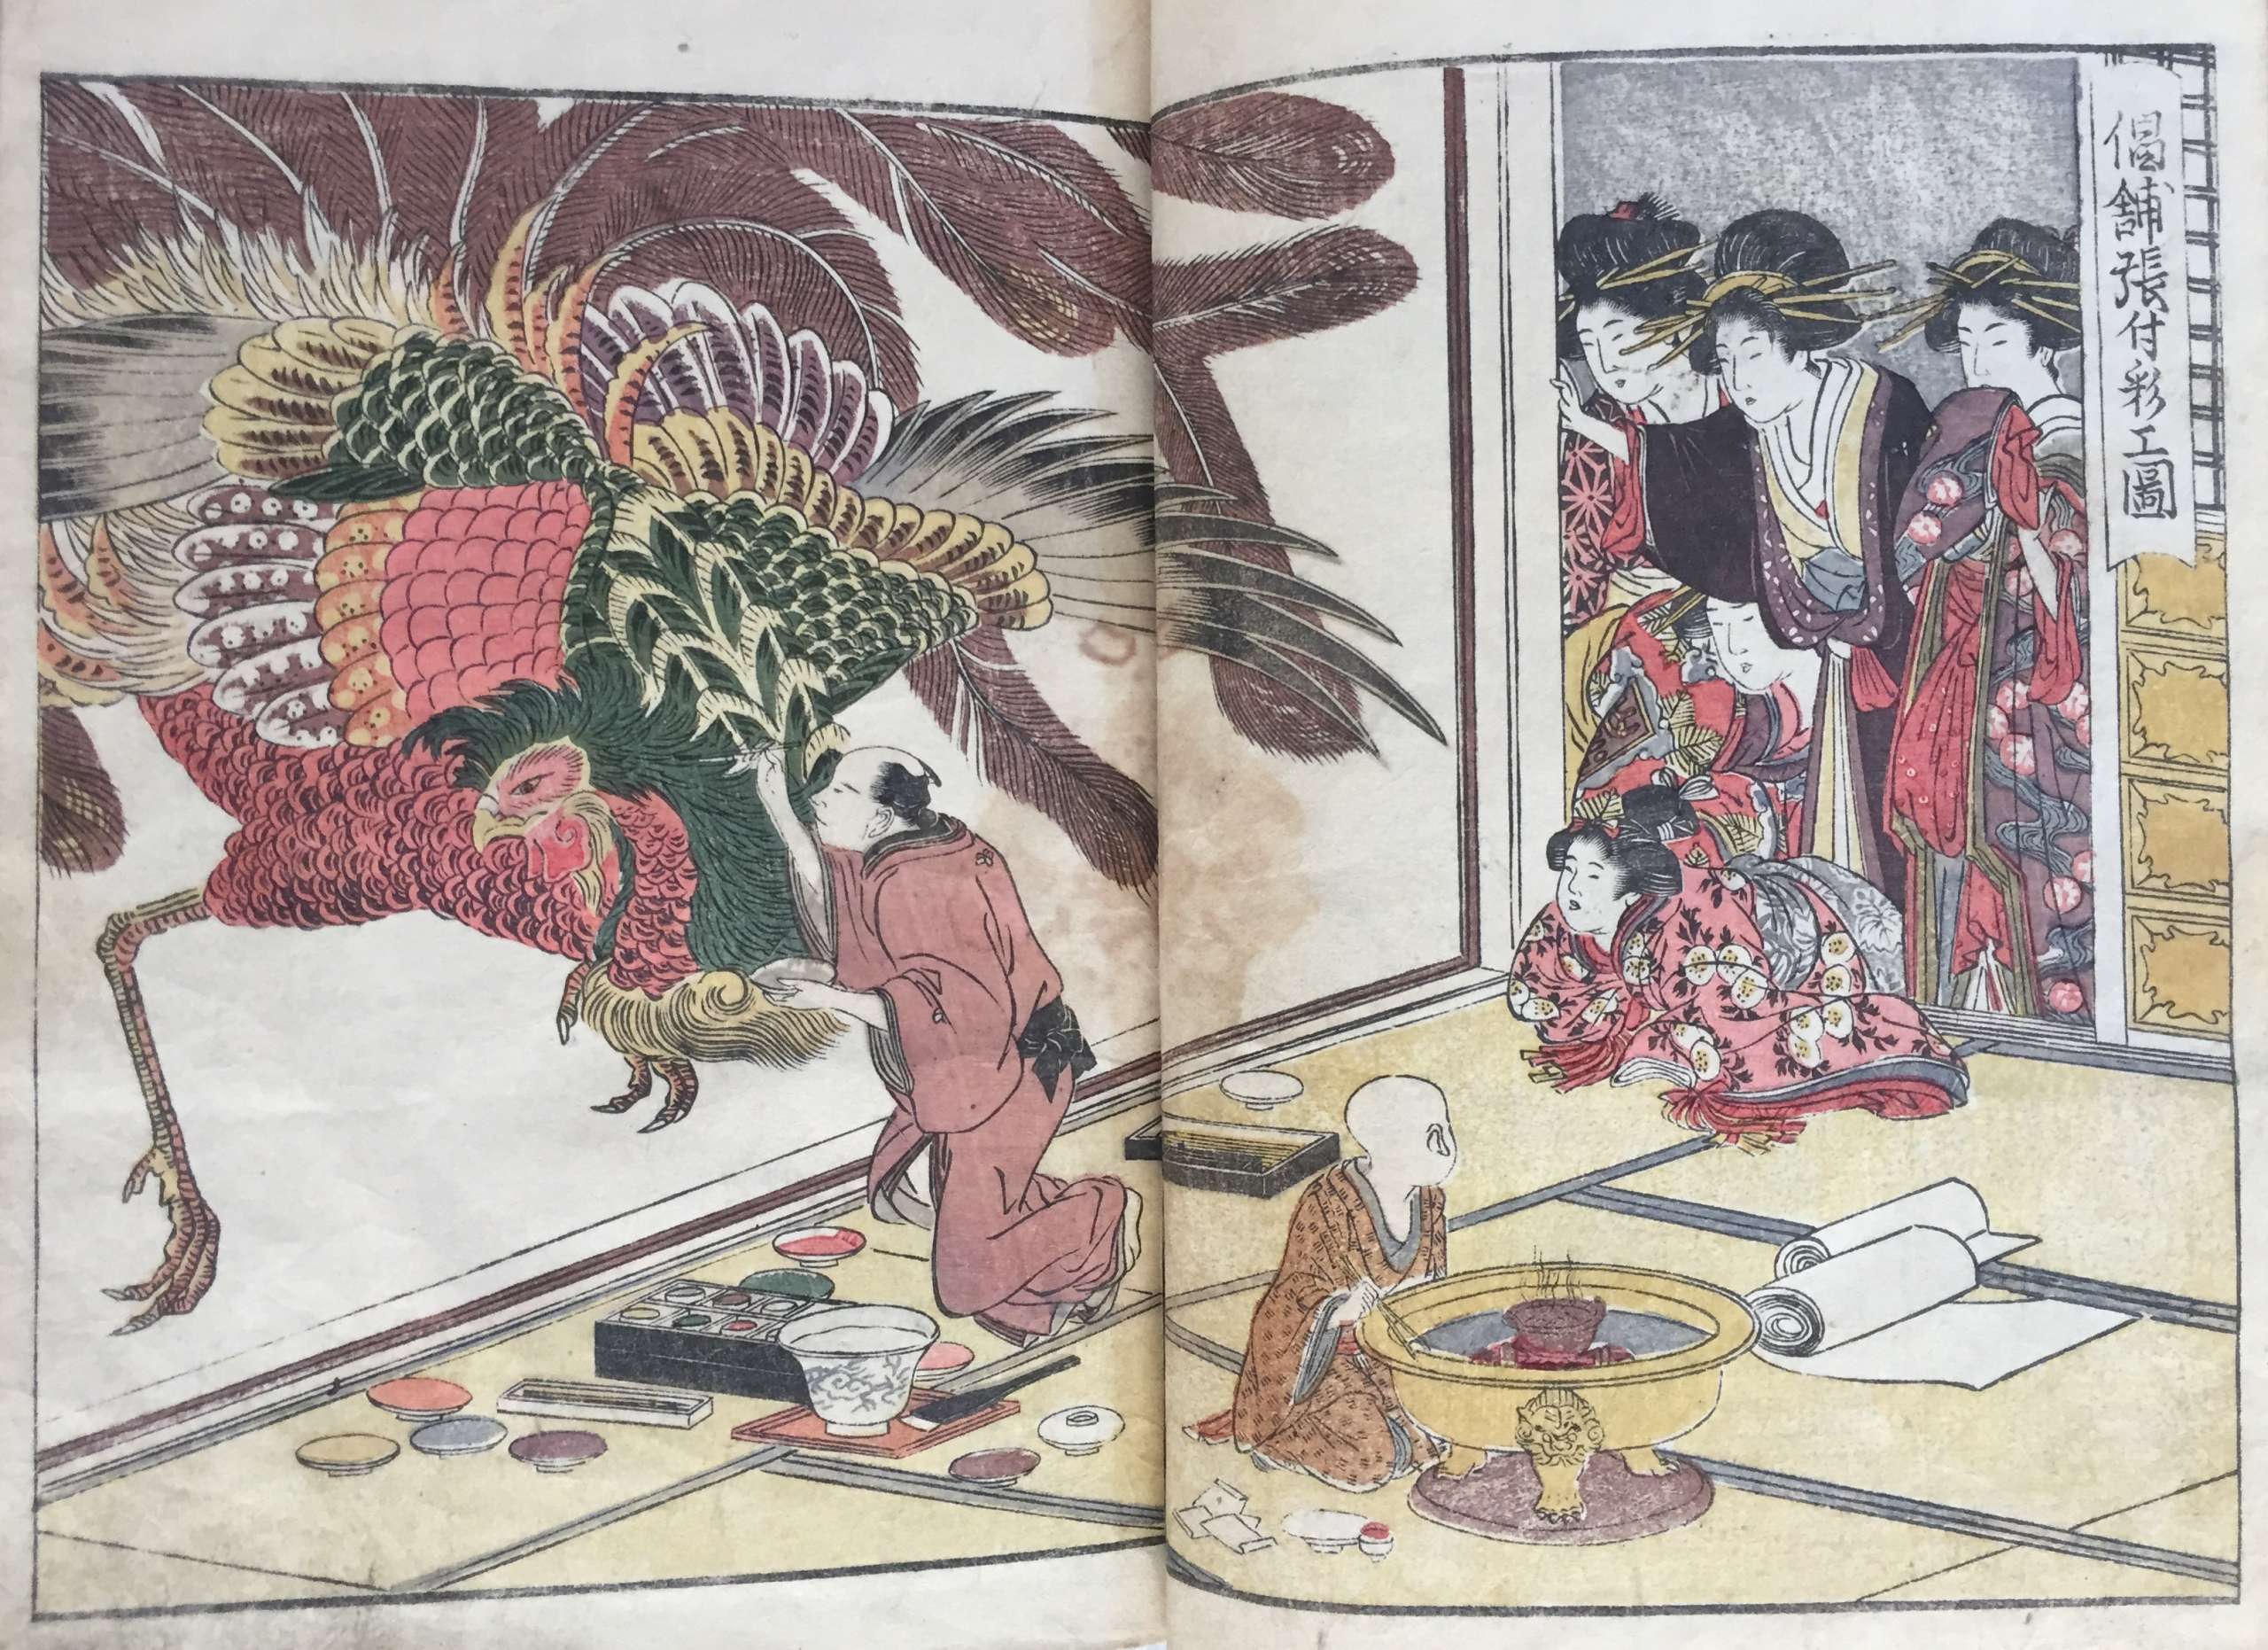 Utamaro. Seiro ehon nenju gyoji (A Picture Book of Annual Events in Yoshiwara). 1804.